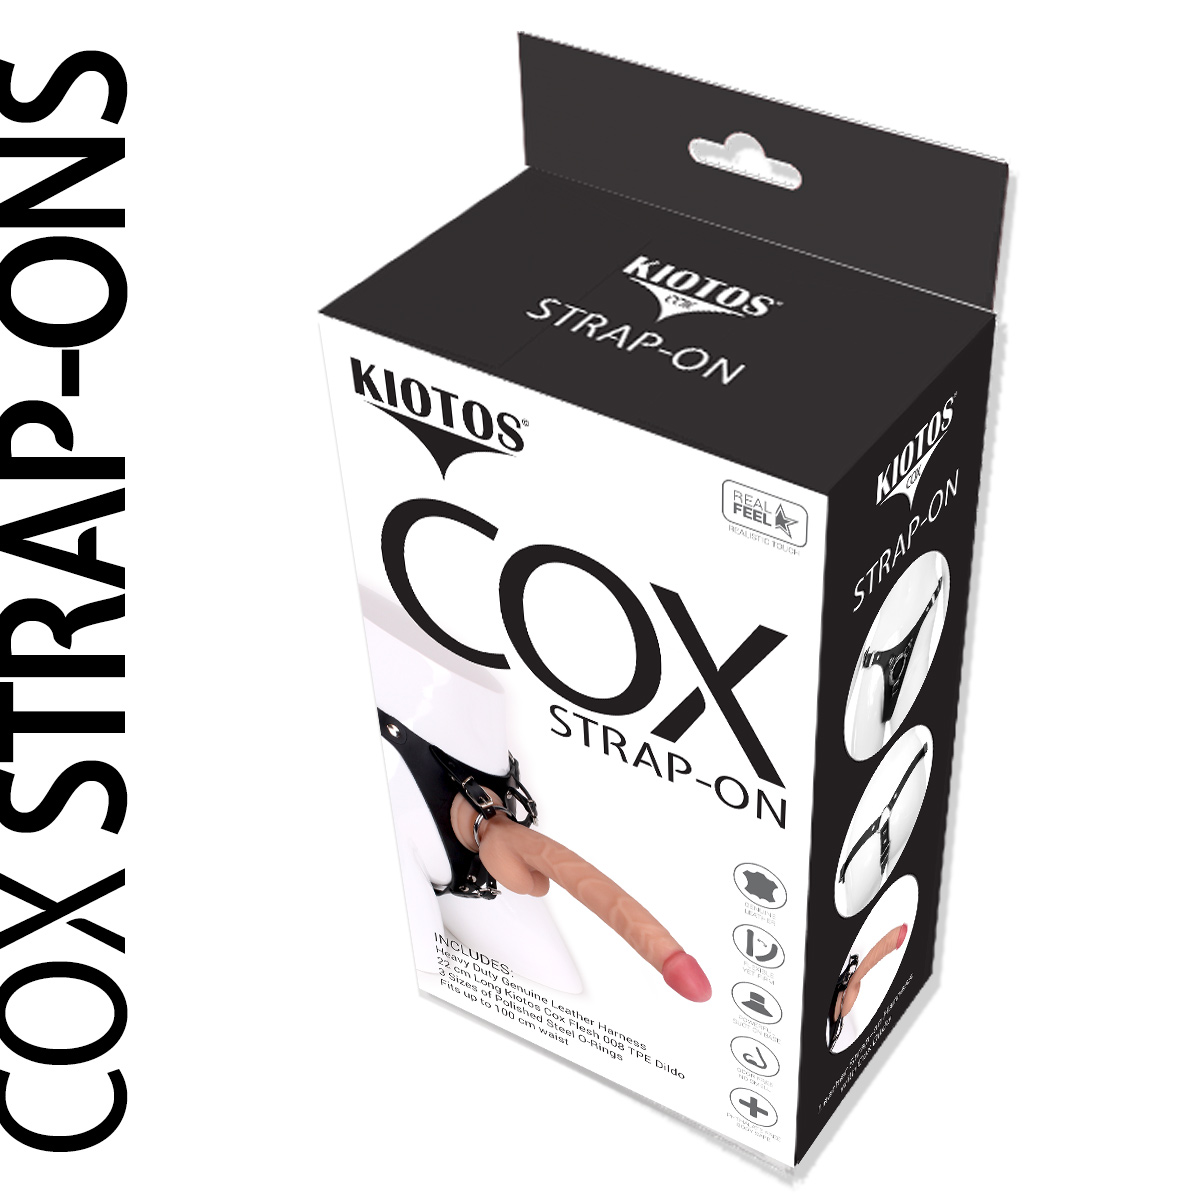 Kiotos-COX-Strap-On-Dildo-Flesh-008-OPR-307904-4